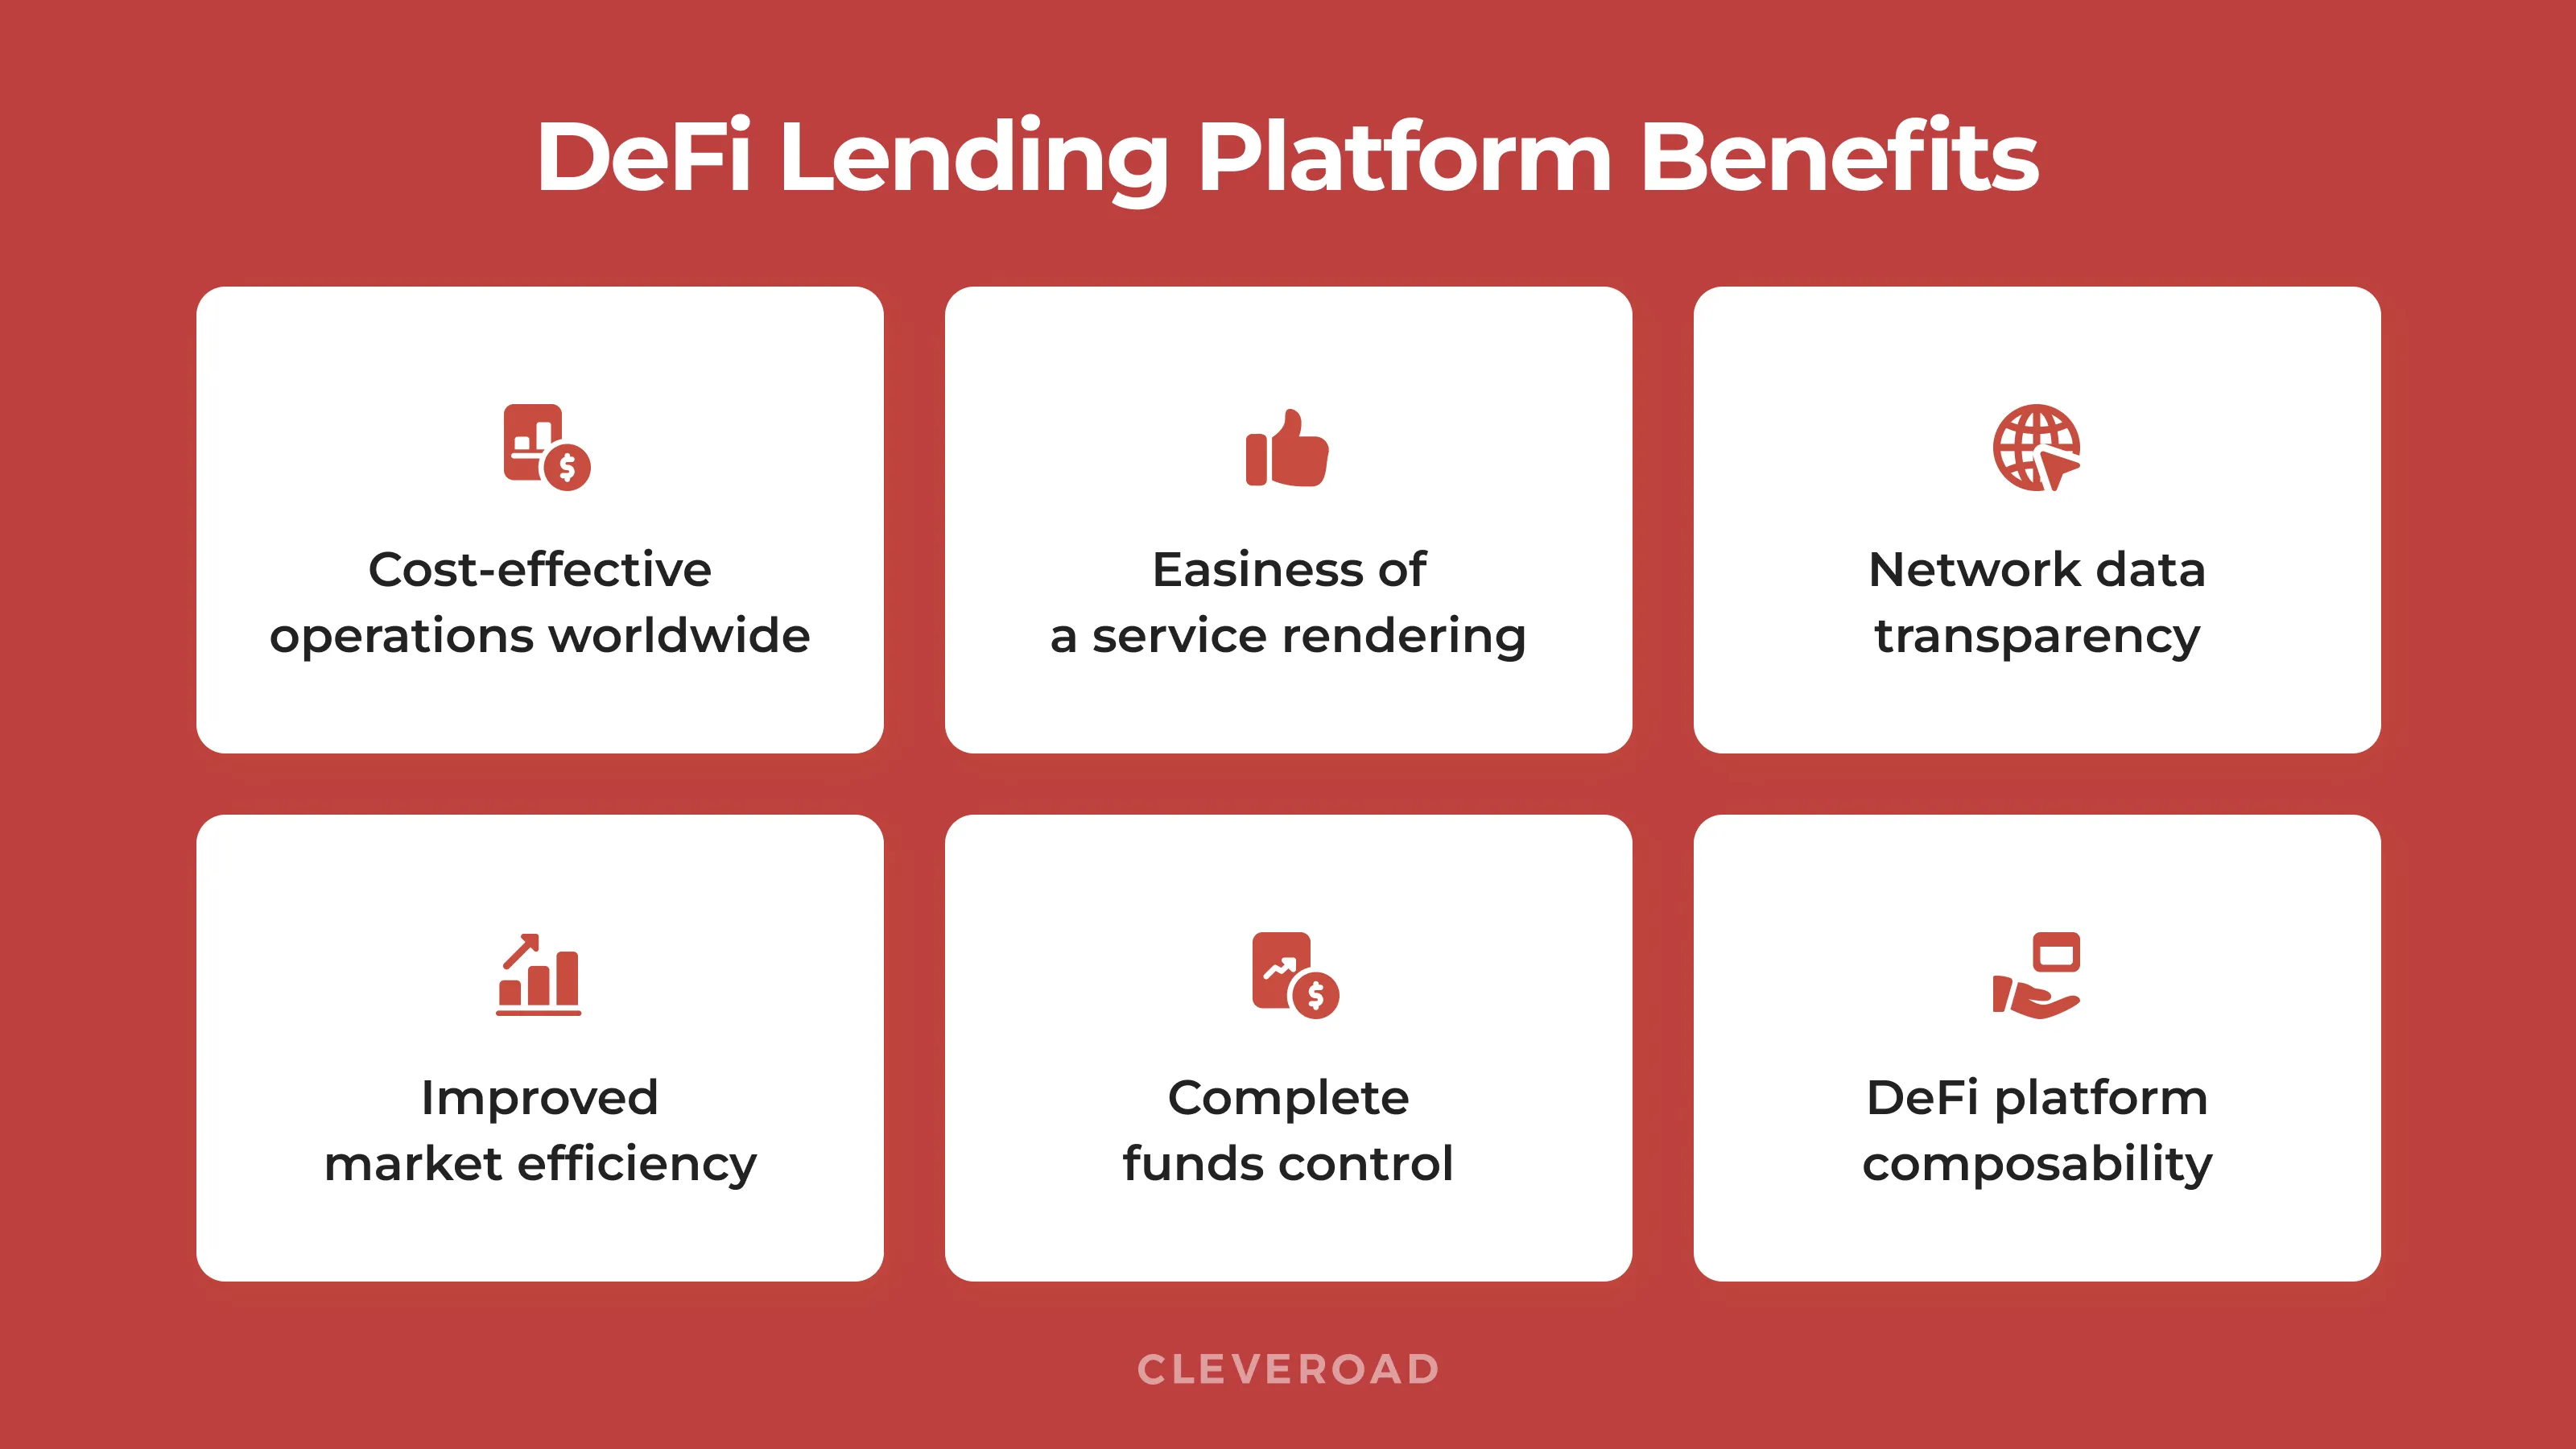 DeFi lending platform benefits